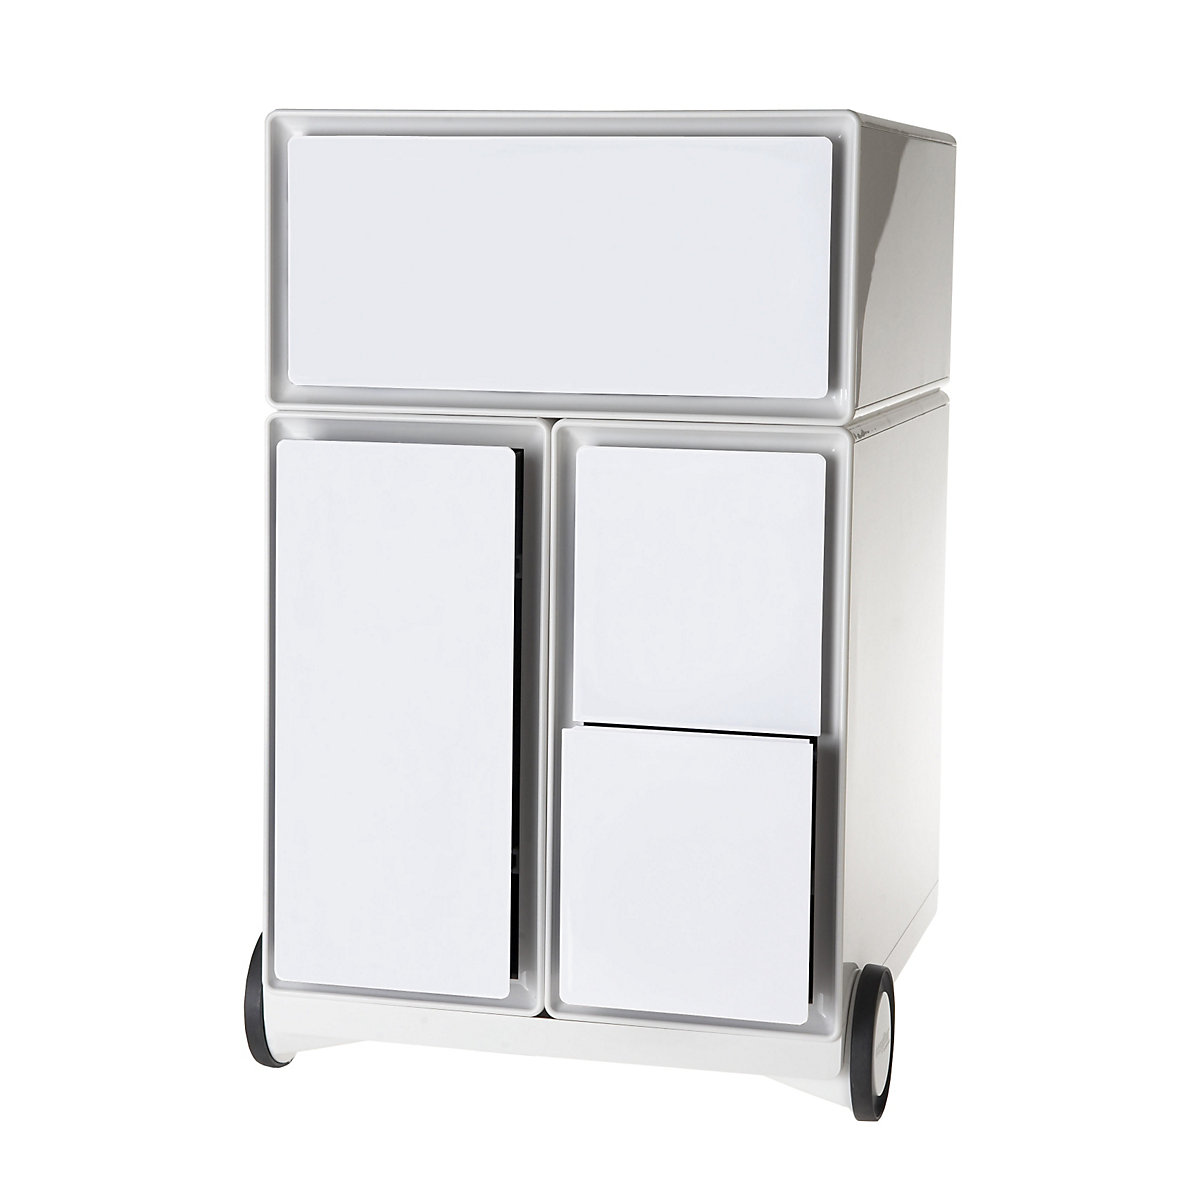 Pojízdný kontejner easyBox® – Paperflow, 1 zásuvka, 1 výsuv pro závěsné složky, 2 výsuvy pro CD, bílá / bílá-15